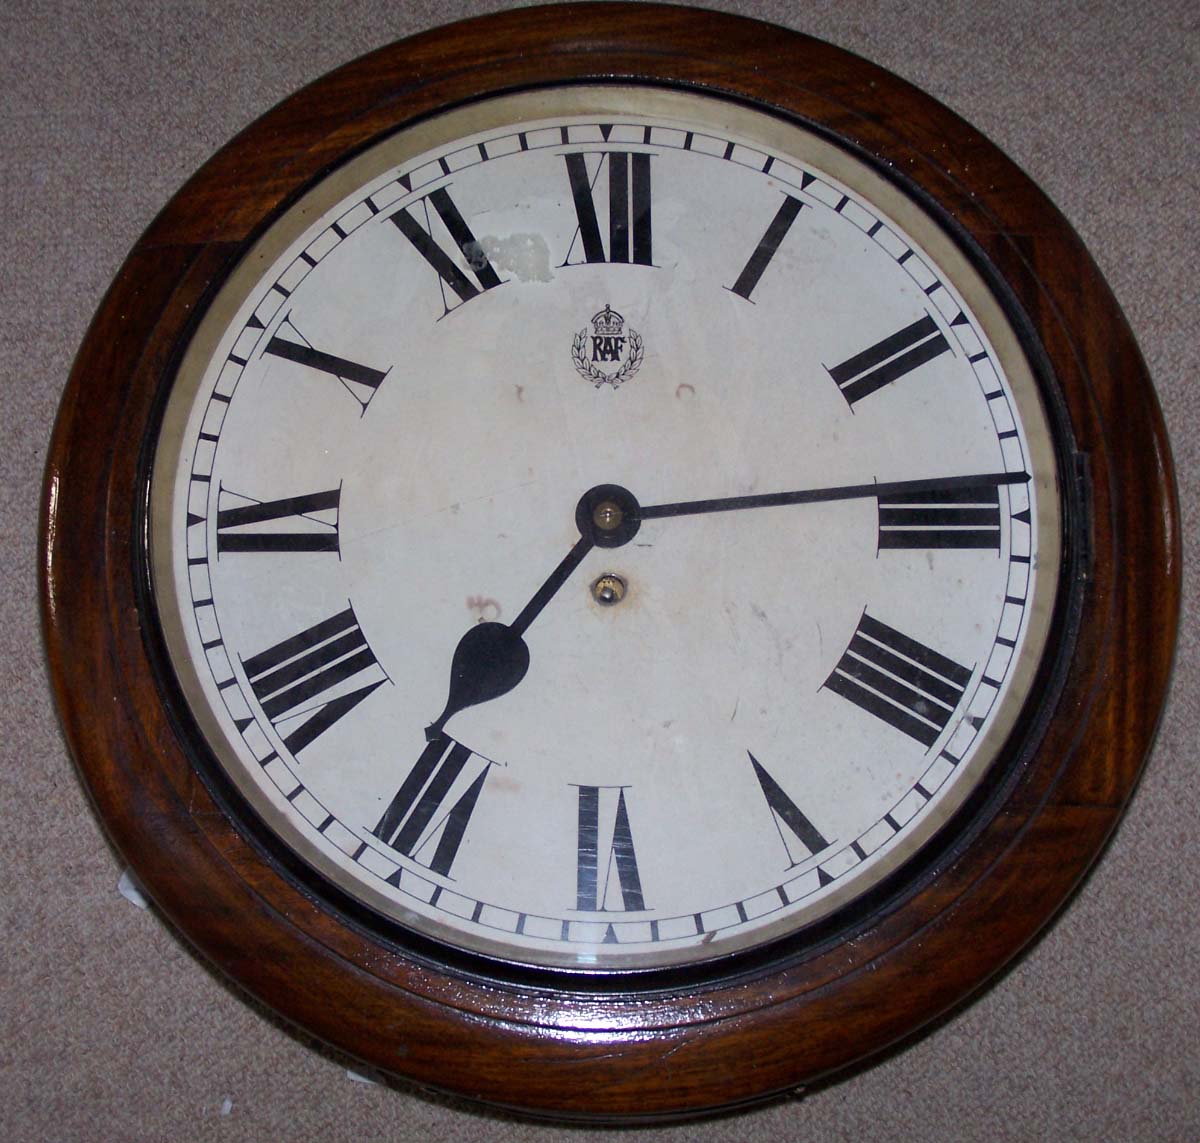 100 Year Old Wall Clock Ridgeway Richardson I Curio Grandfather Clock At 1 800 Rowe Antique